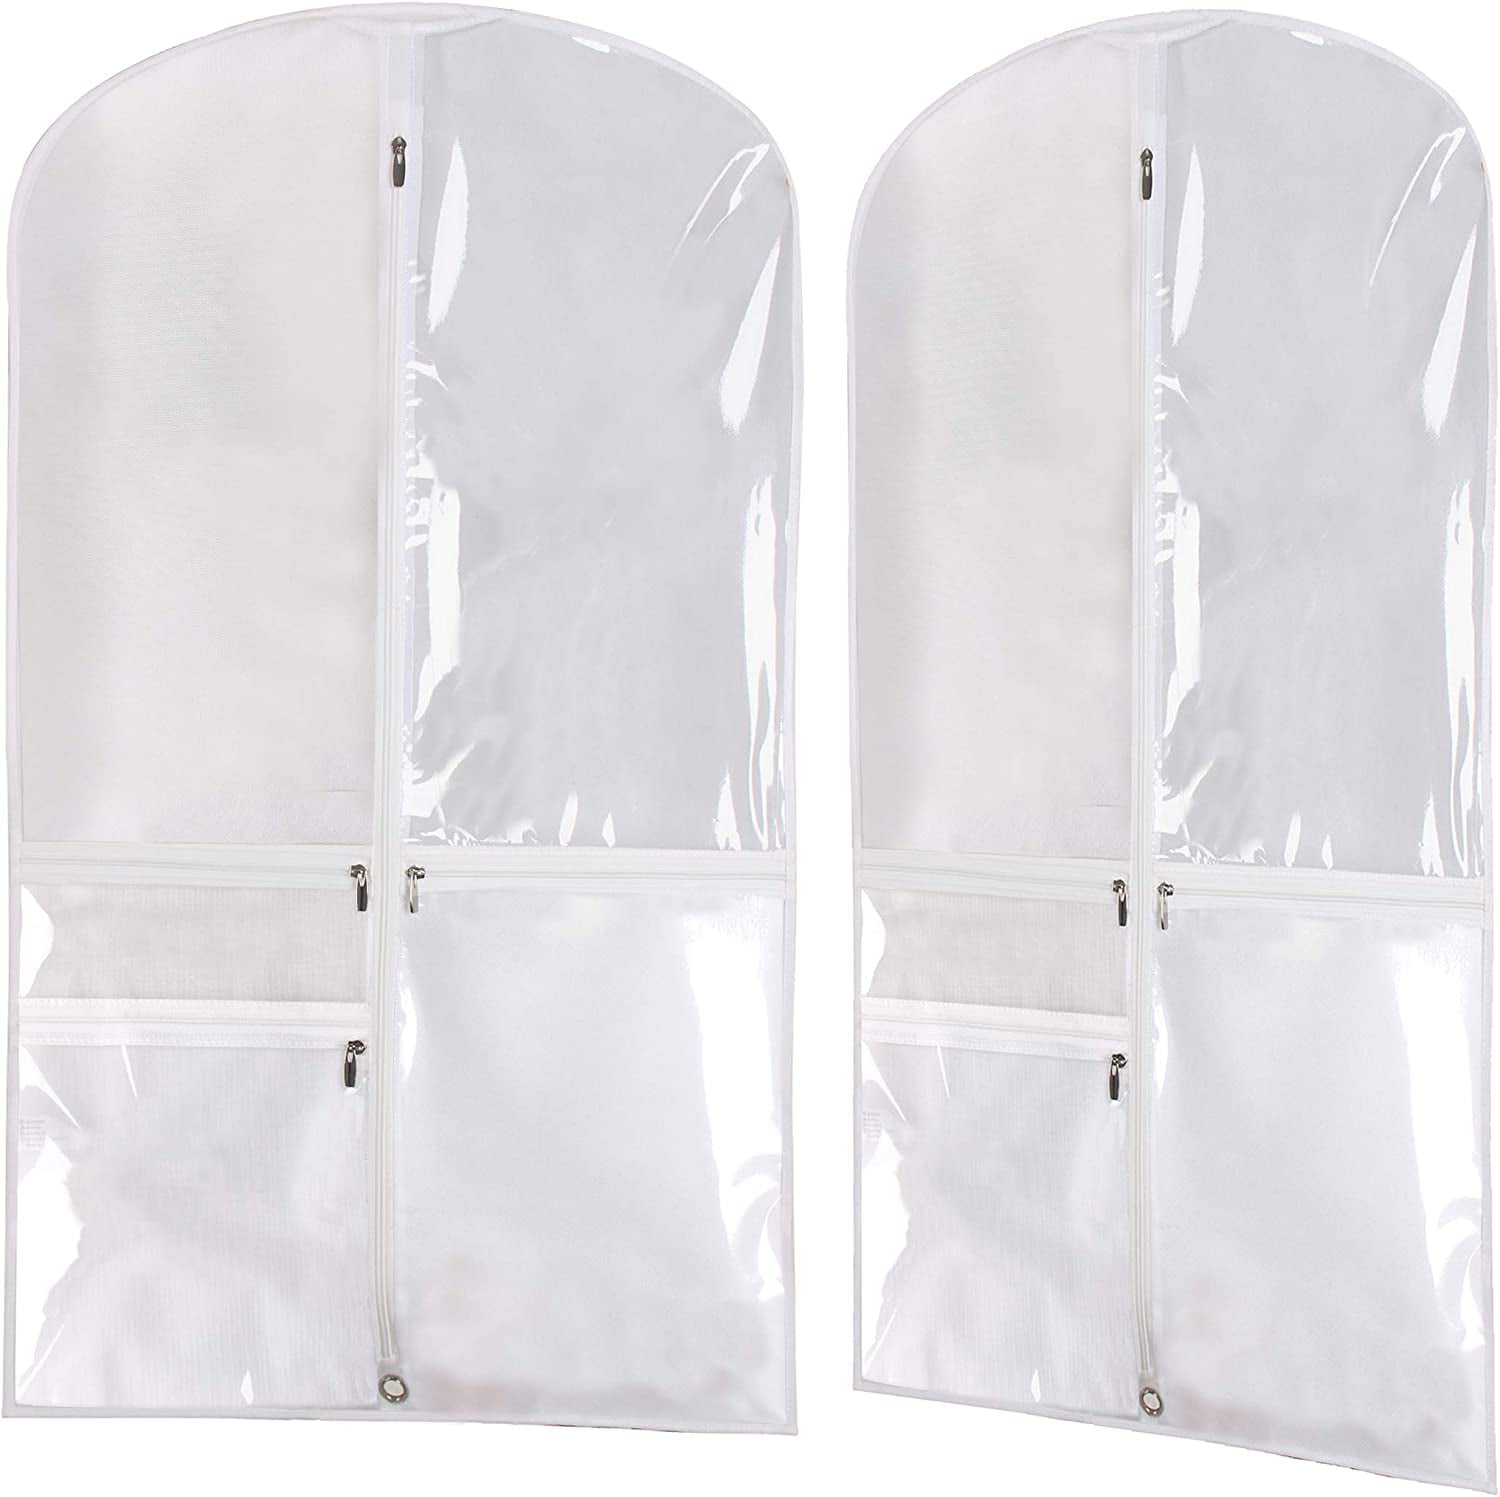 KIMBORA 40 Travel Dance/Dress Costume Garment Bag with Clear Accessories Zipper Pockets Suit Garment Cover White 